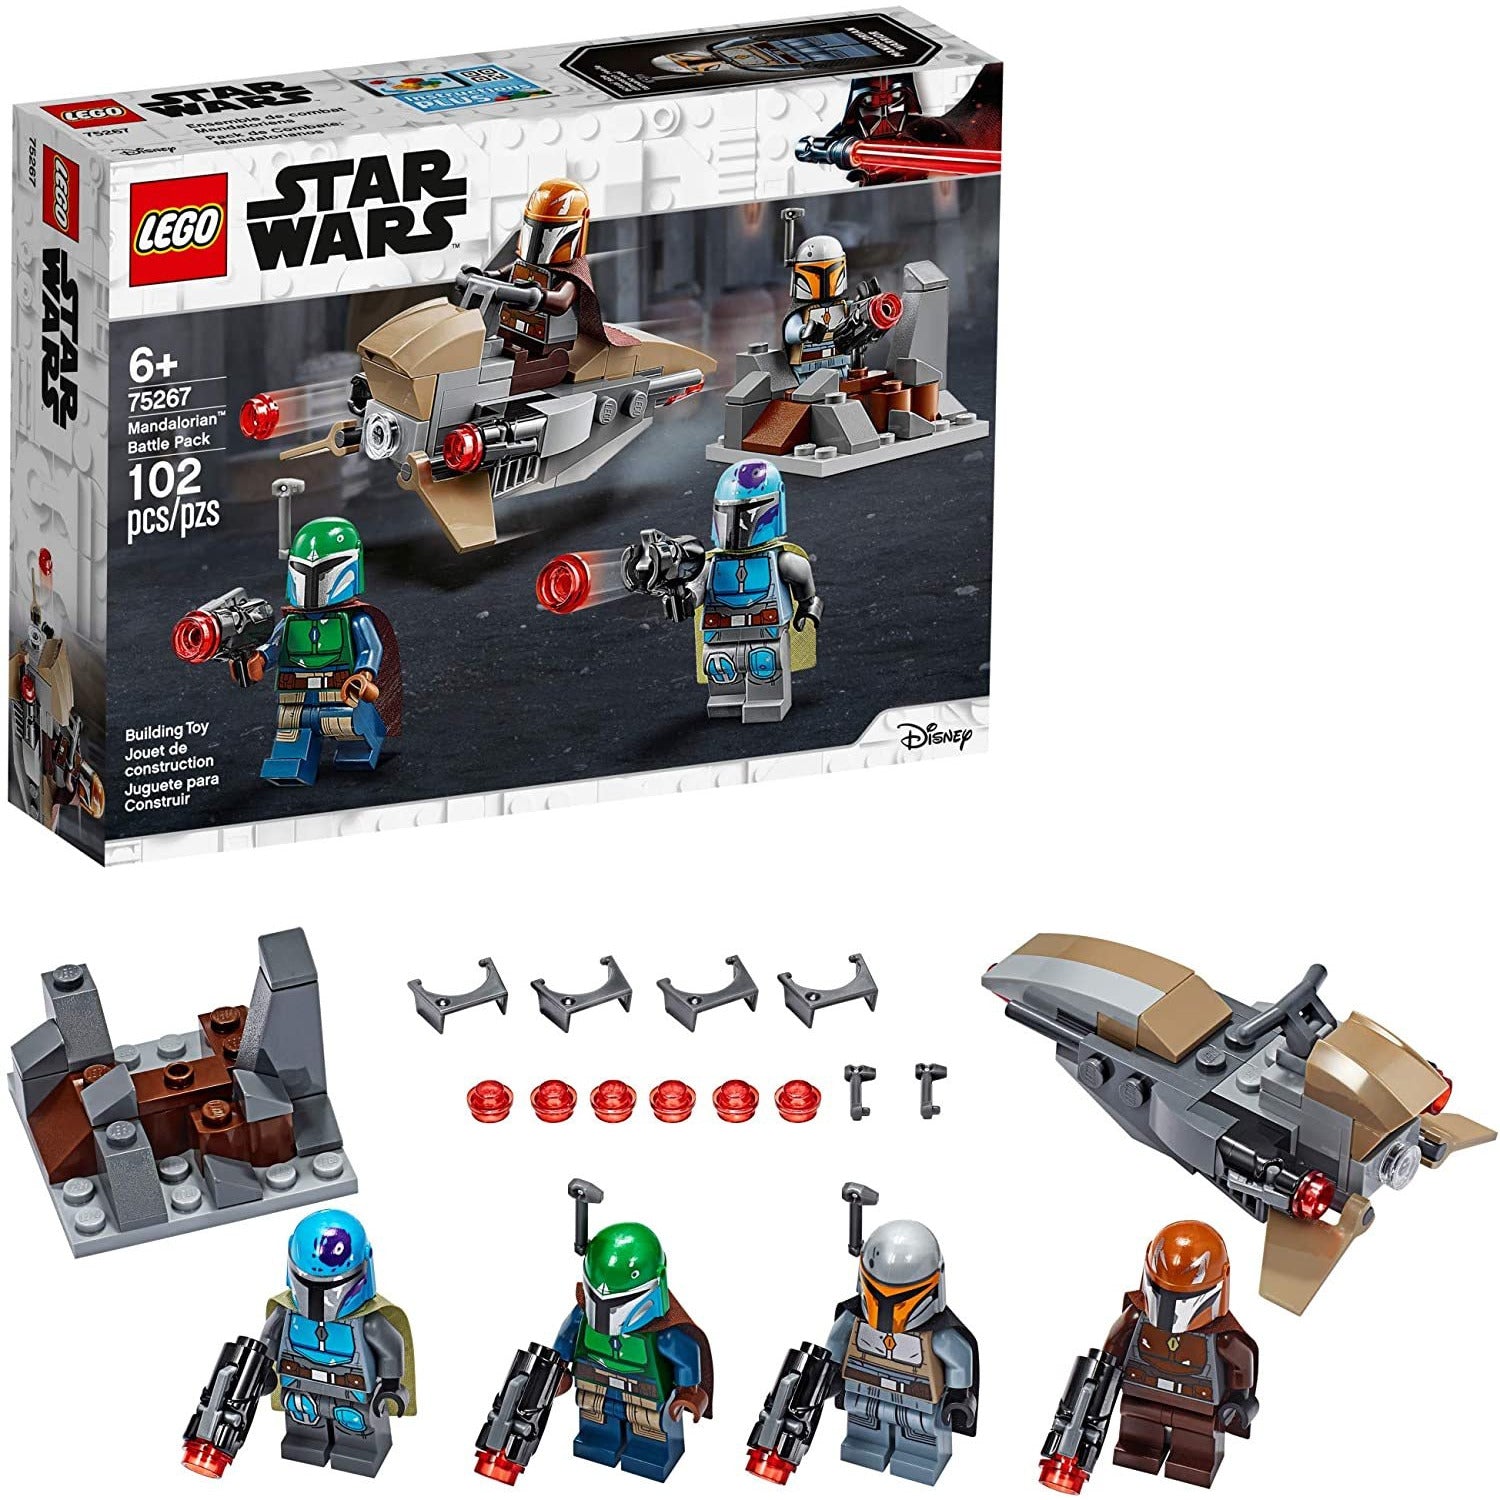 Series: Lego Star Wars: Mandalorian Battle Pack 75267